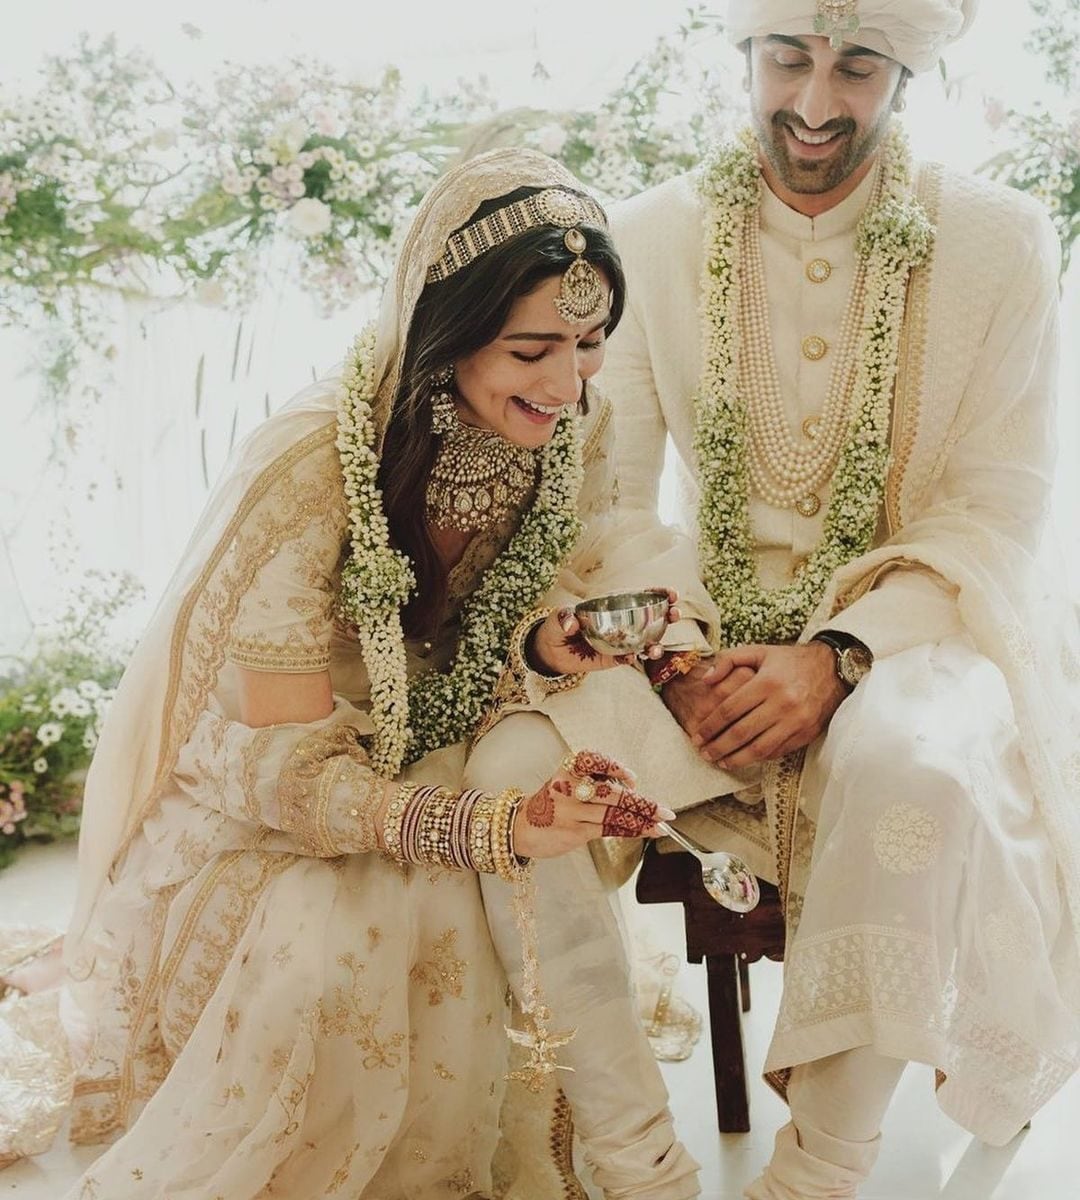 AliaRanbirWedding: Mr & Mrs Kapoor Step Out For Paparazzi